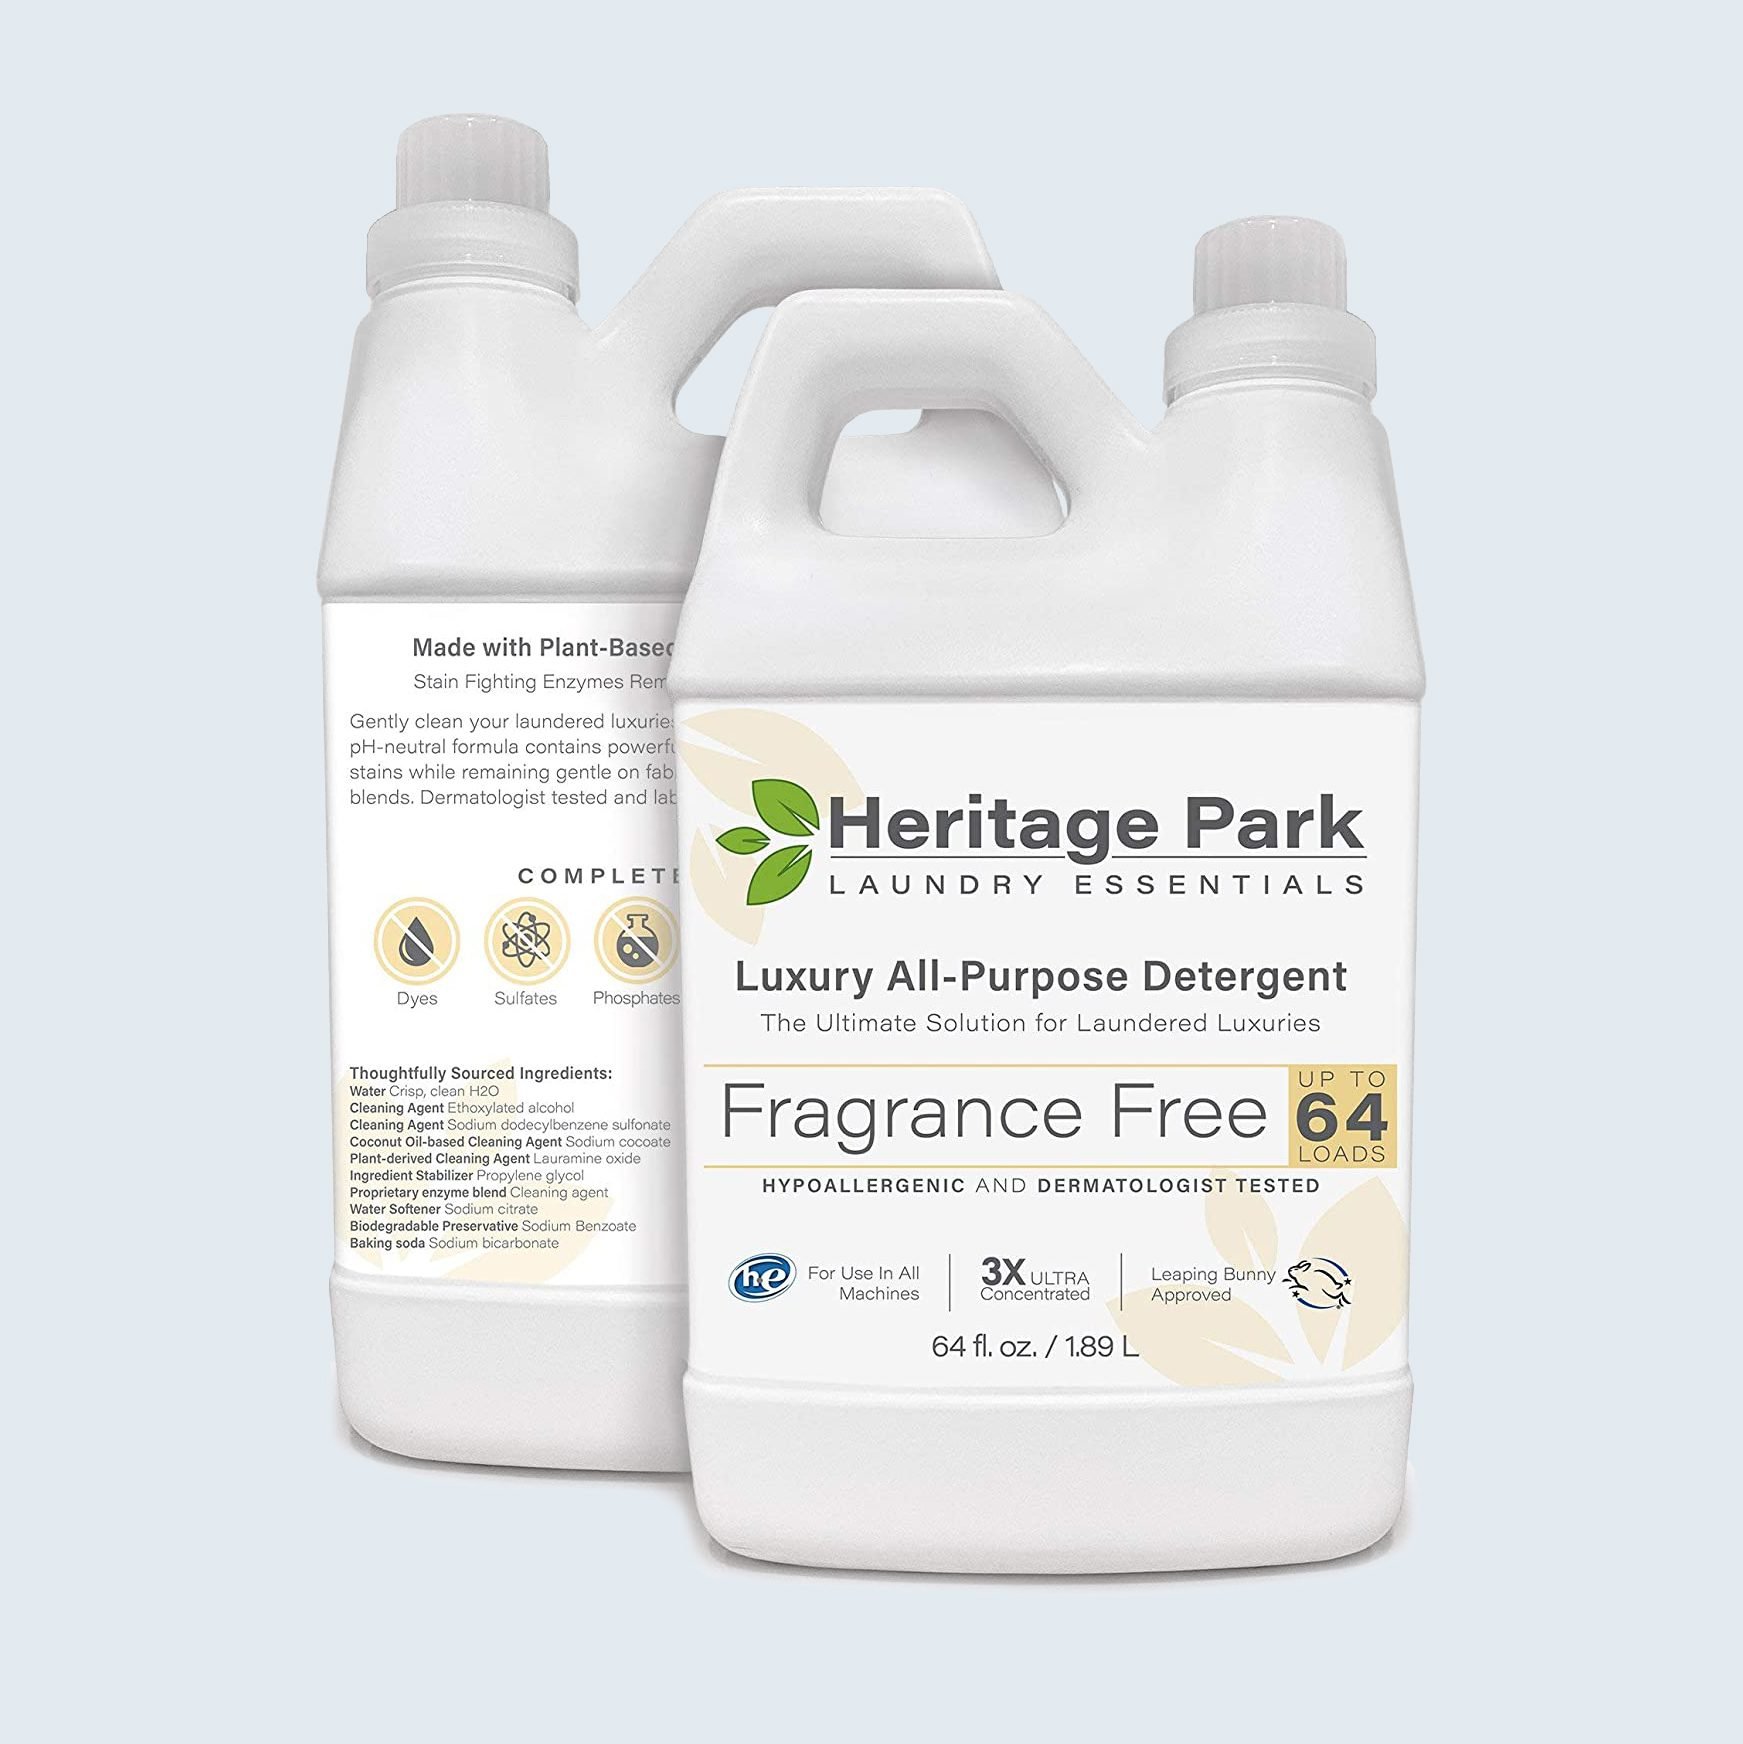 Heritage Park Laundry Essentials Luxury All-Purpose Detergent